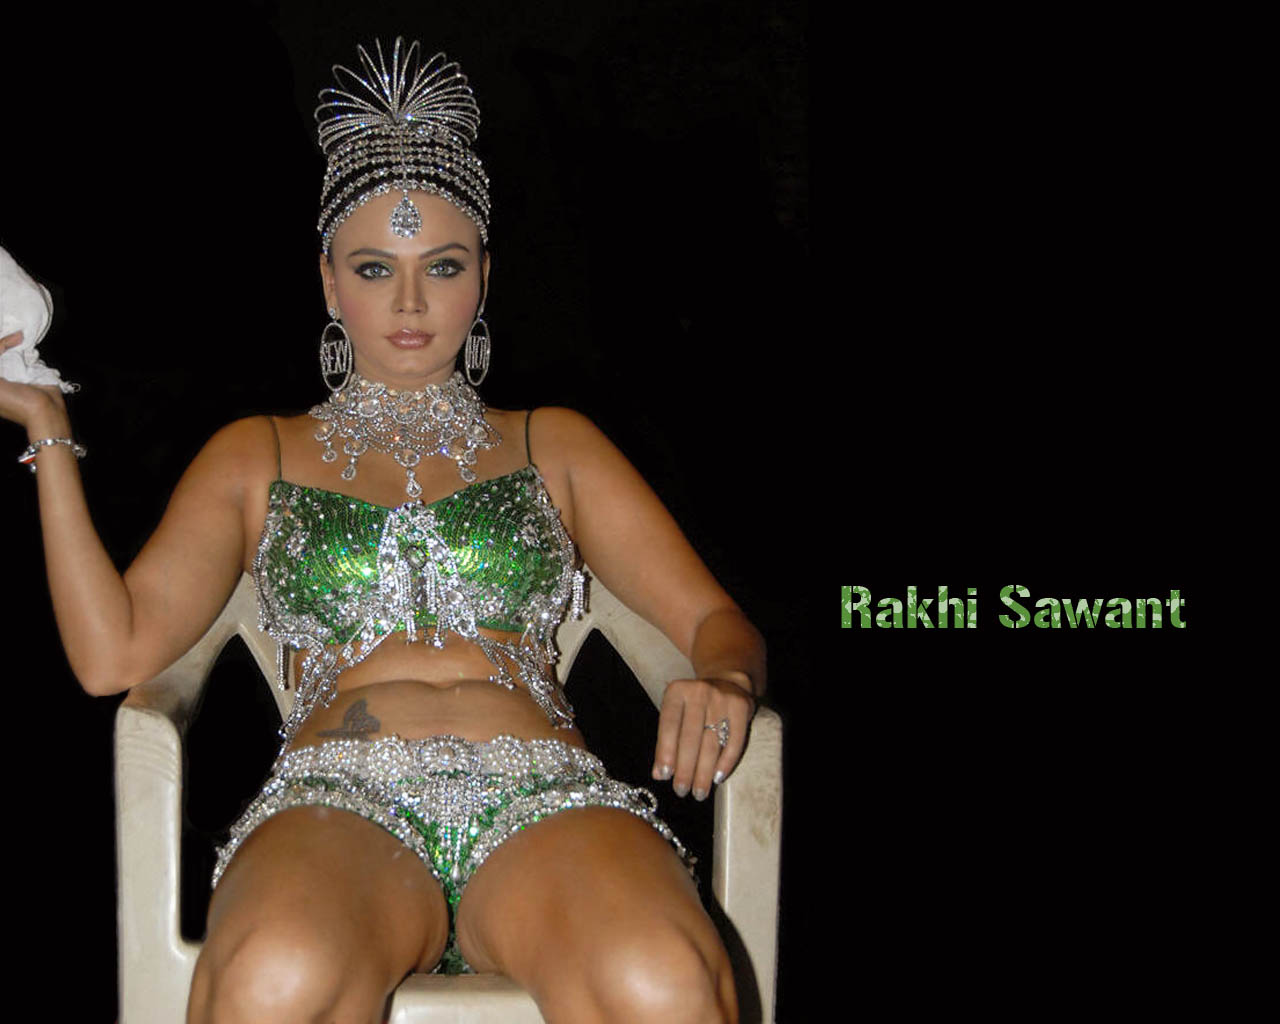 Rakhi Sawant Porn Xxx Vidio - Rakhi sawant cock big dick pic - Pics and galleries